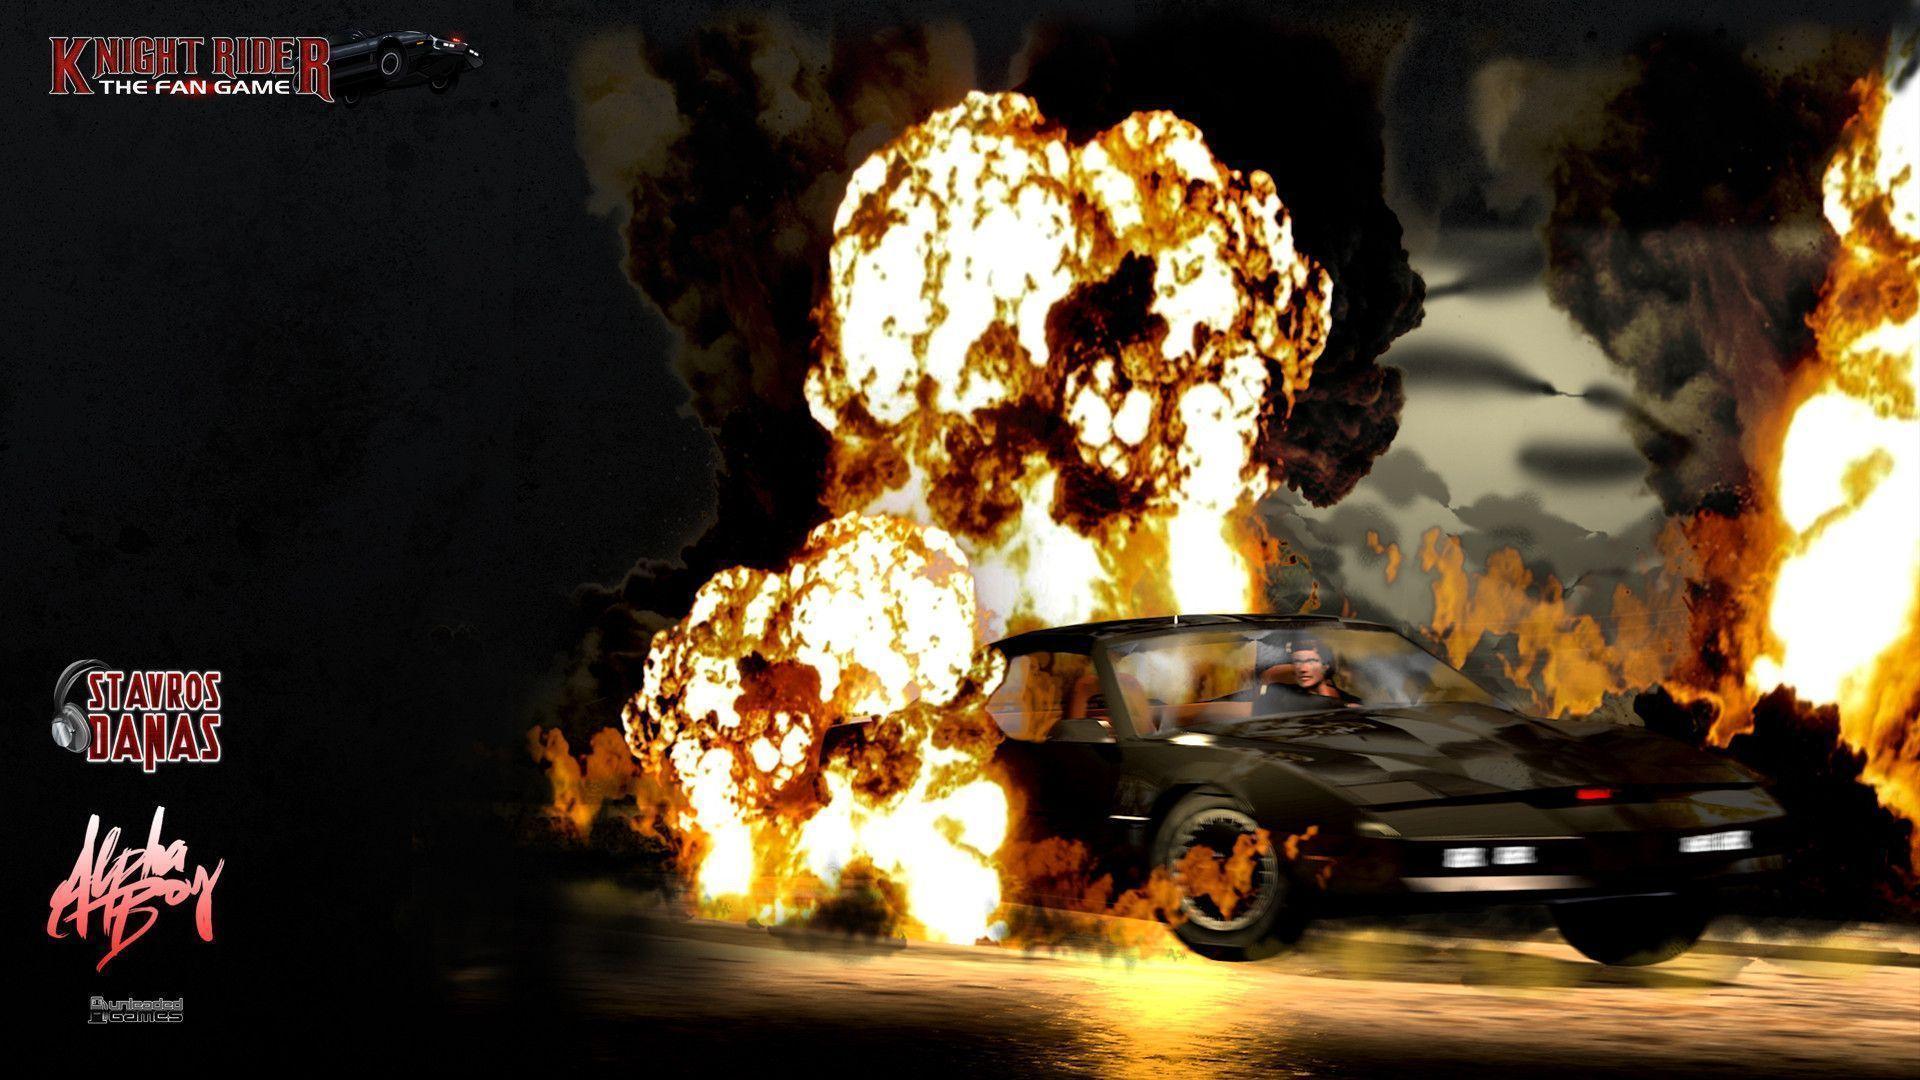 Knight Rider: The Fan Game Screenshots